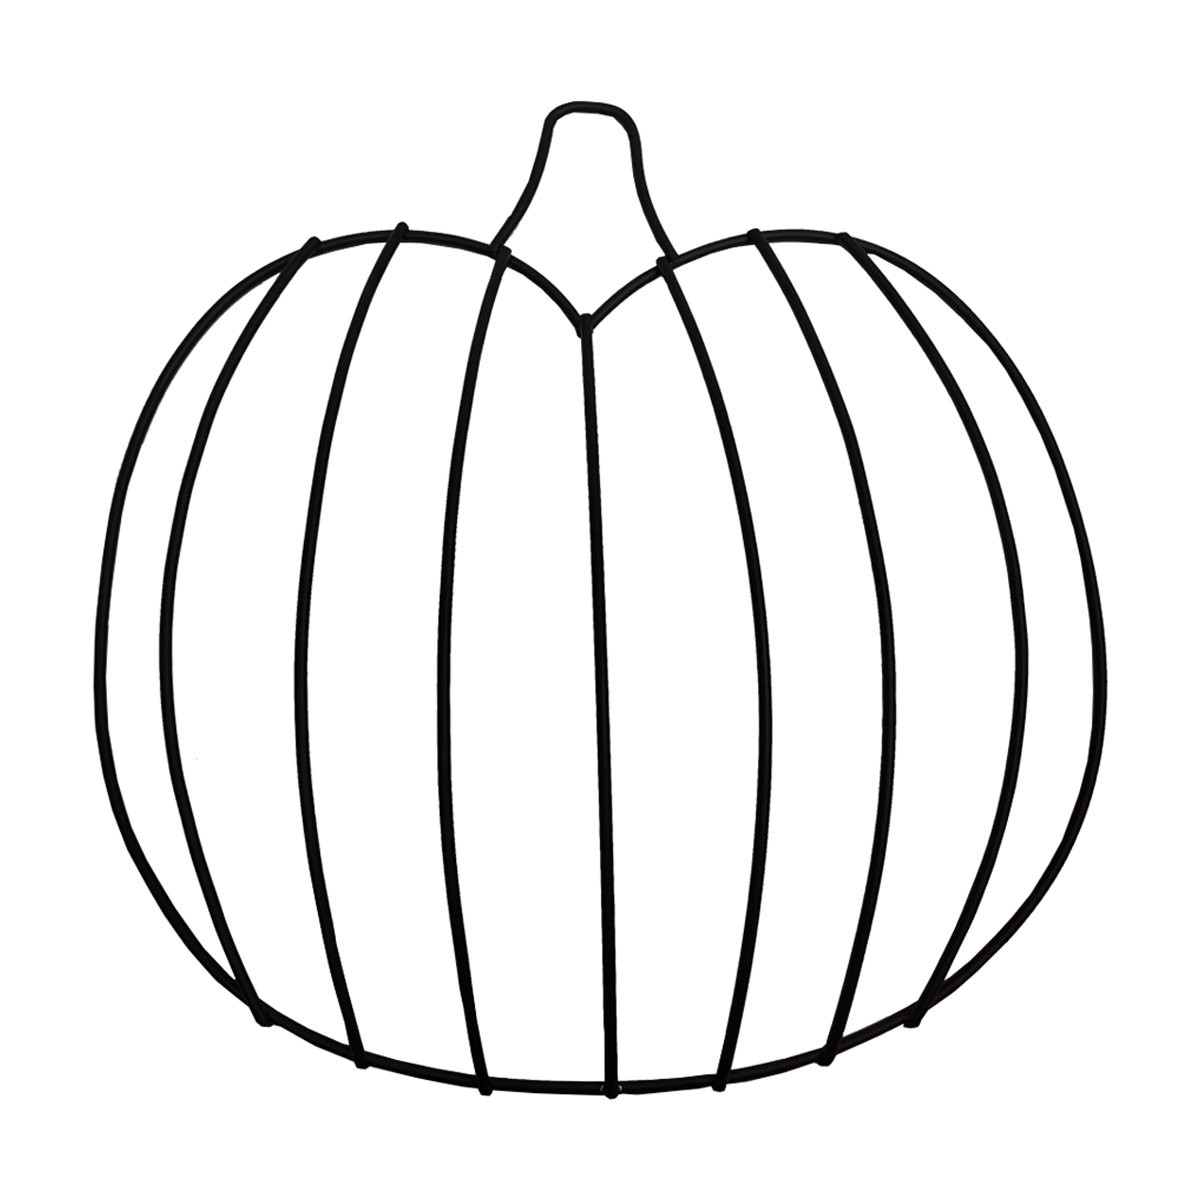 Pumpkin-Shaped Wire Wreath Form